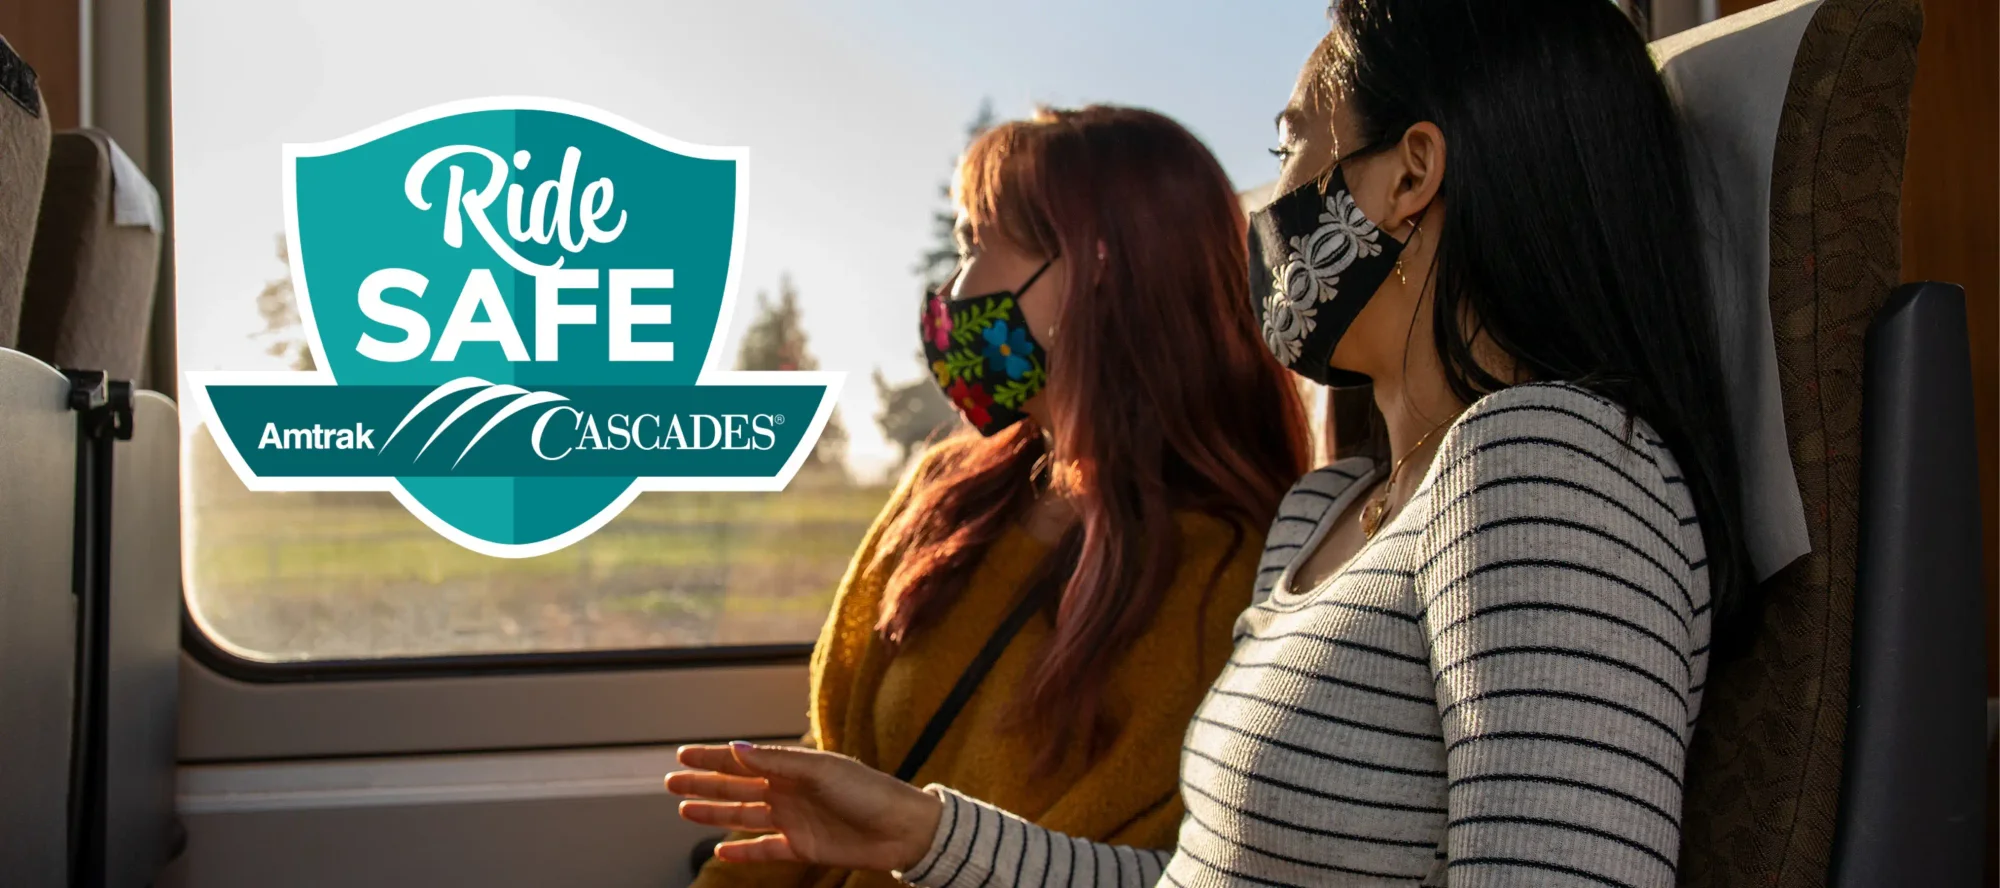 Ride Safe - Train window